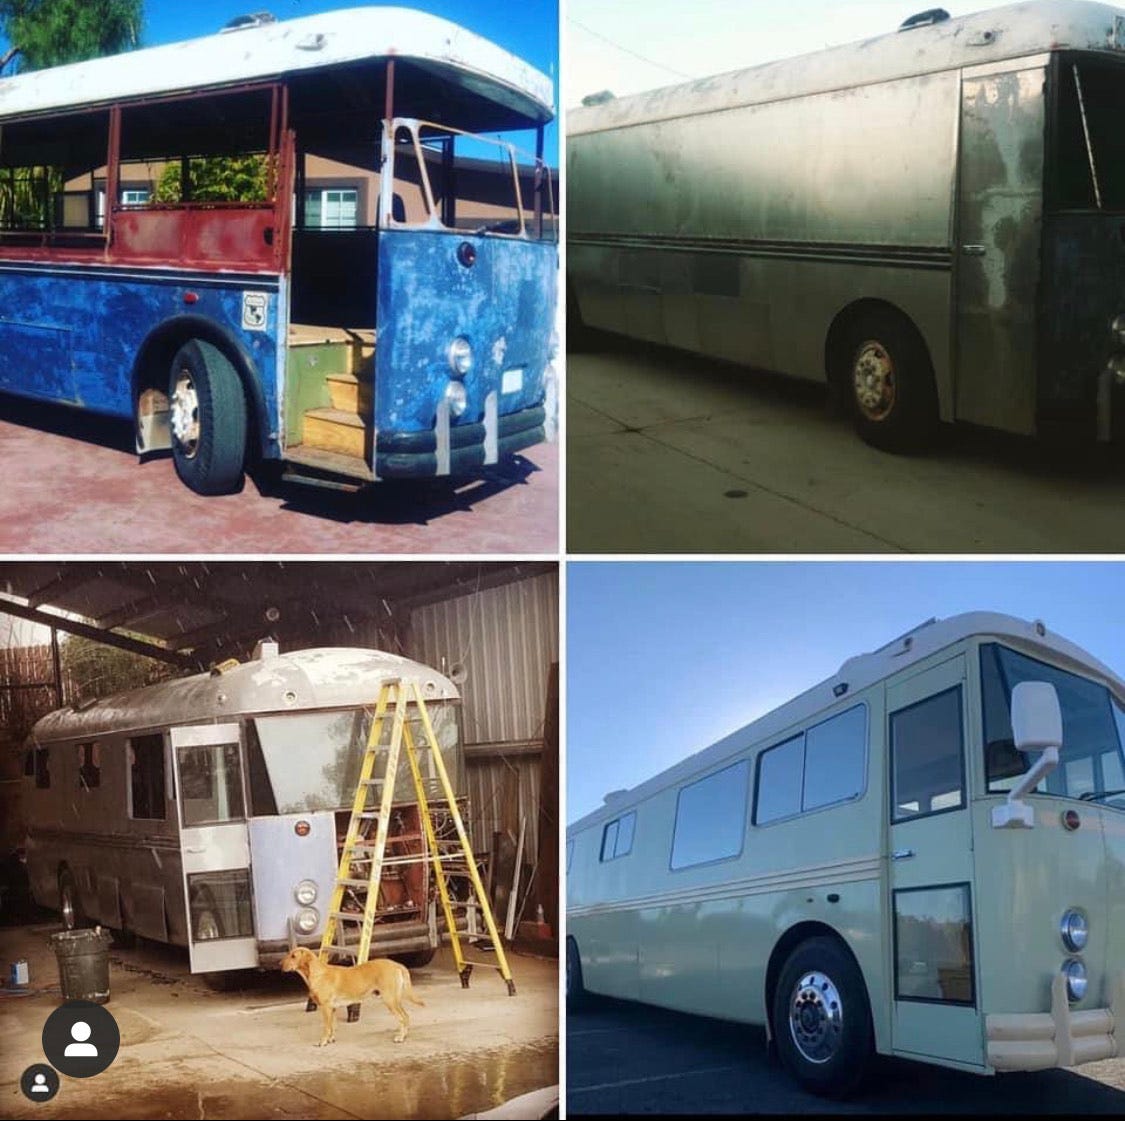 '50s bus, build